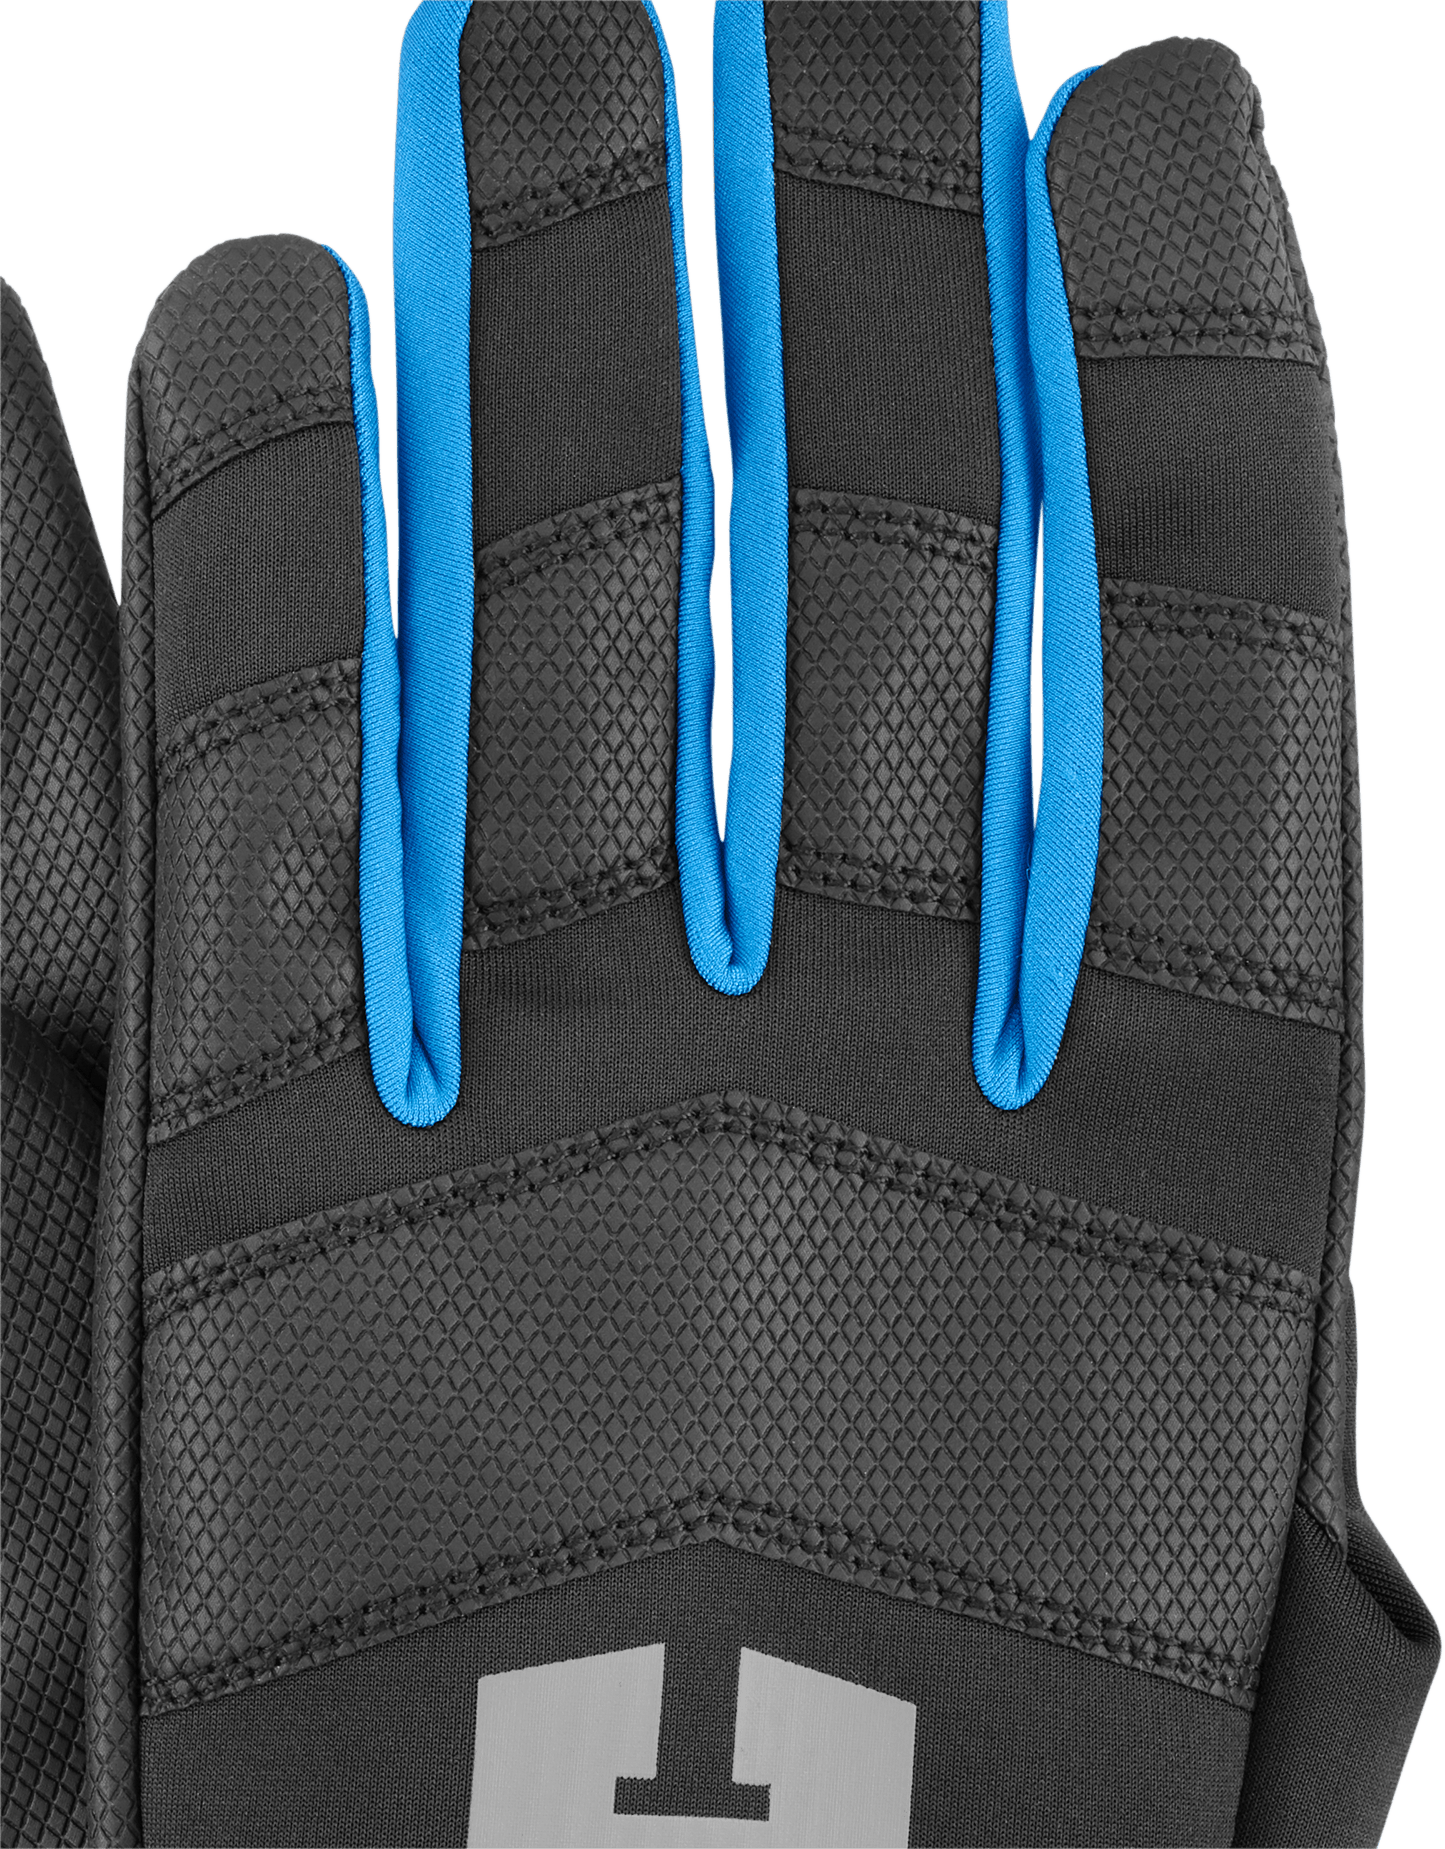 Performance Fit Gloves - Medium